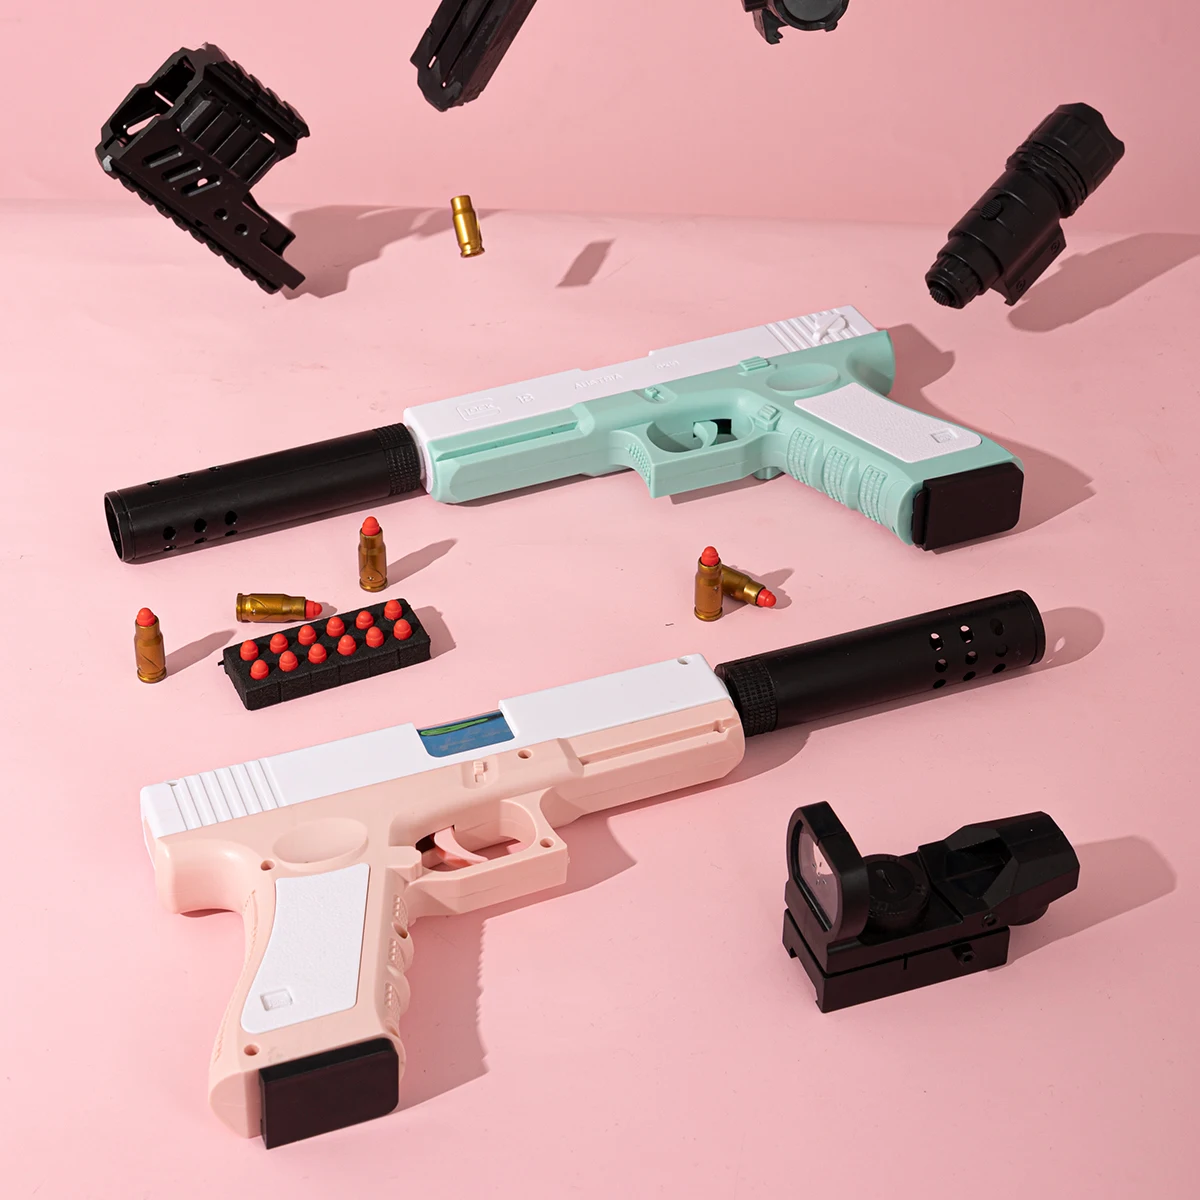 

Glock Toy Gun Pistol Macaron Color Soft Bullet Shell Ejection Blaster Handgun Plastic Shooting Model For Kids Adult Outdoor Game